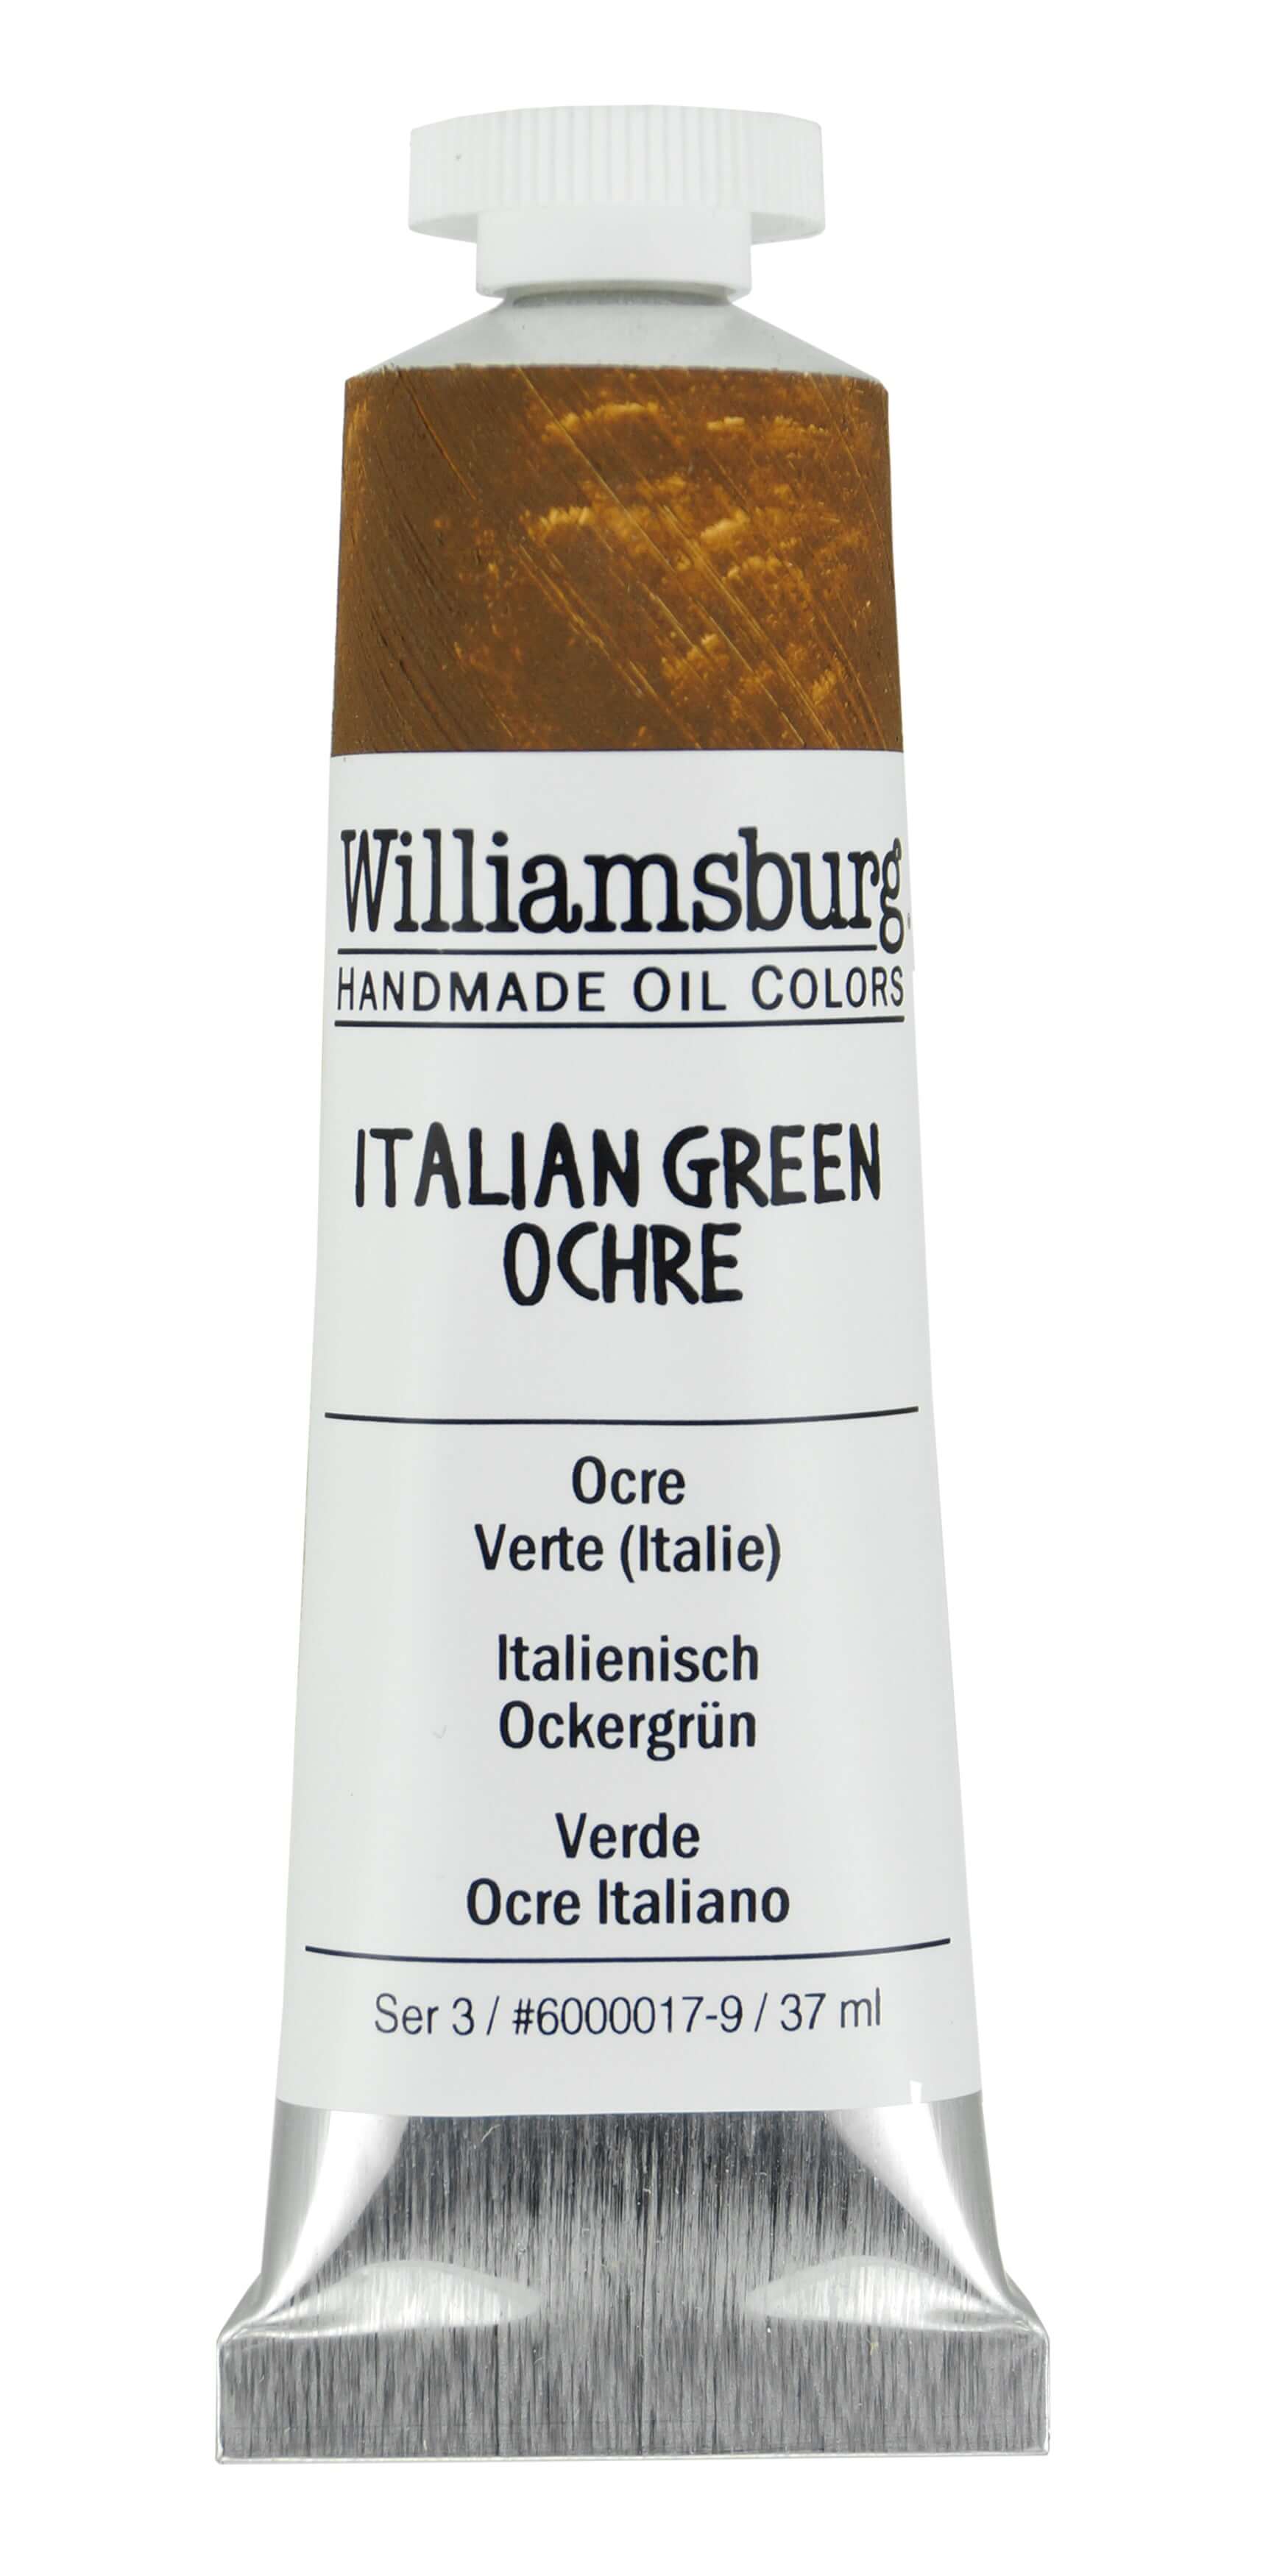 Williamsburg Oliemaling Italian Green Ochre